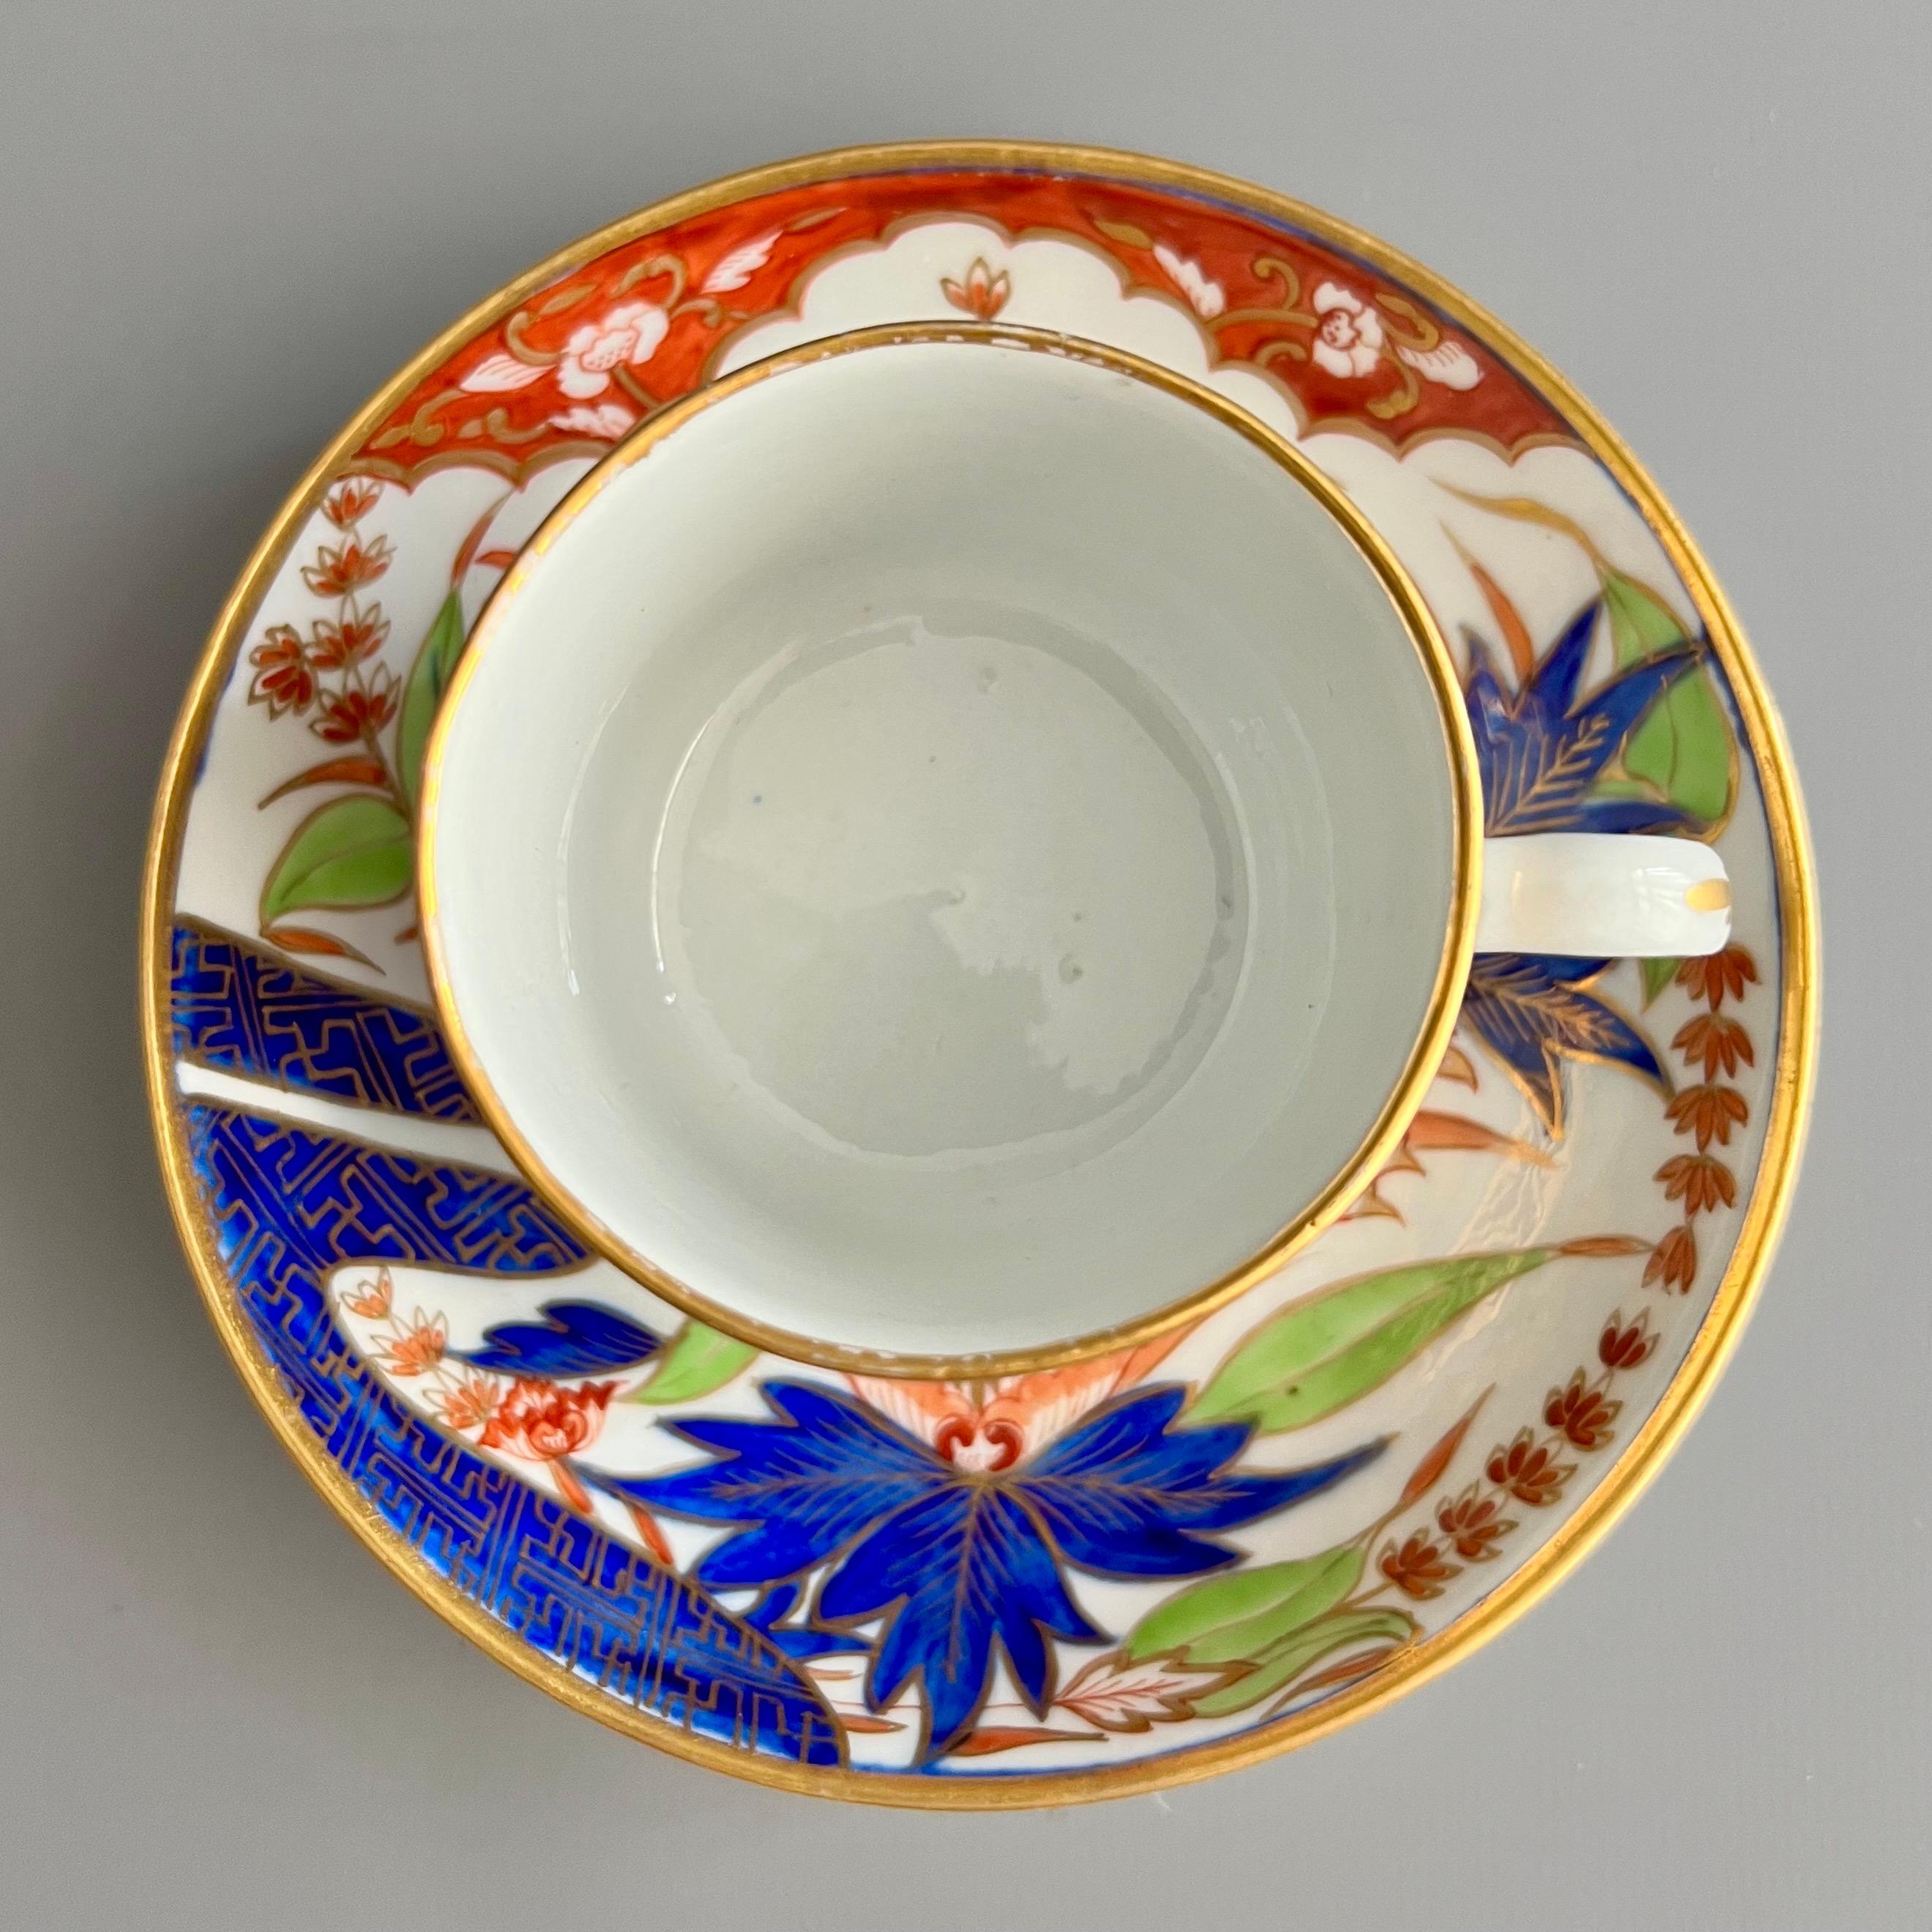 Porcelain Coalport John Rose Teacup Trio, Imari, Finger and Thumb Pattern 376, 1803-1807